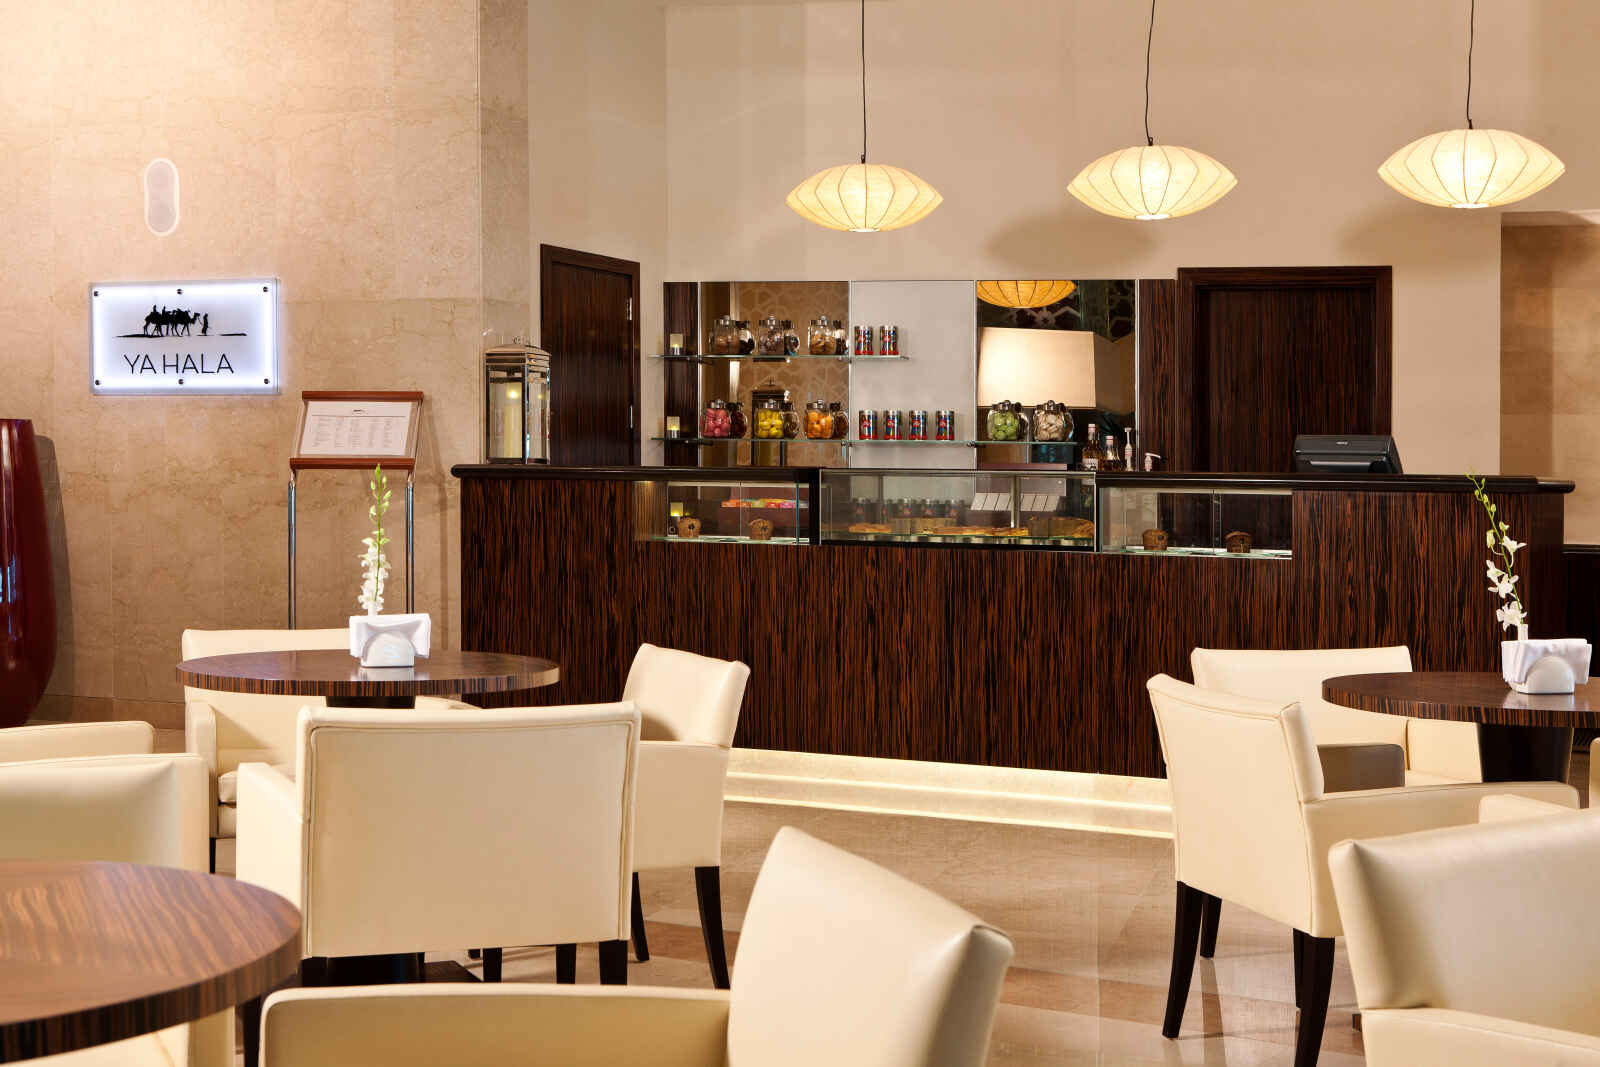 Yahala café, Hilton Doha, Qatar